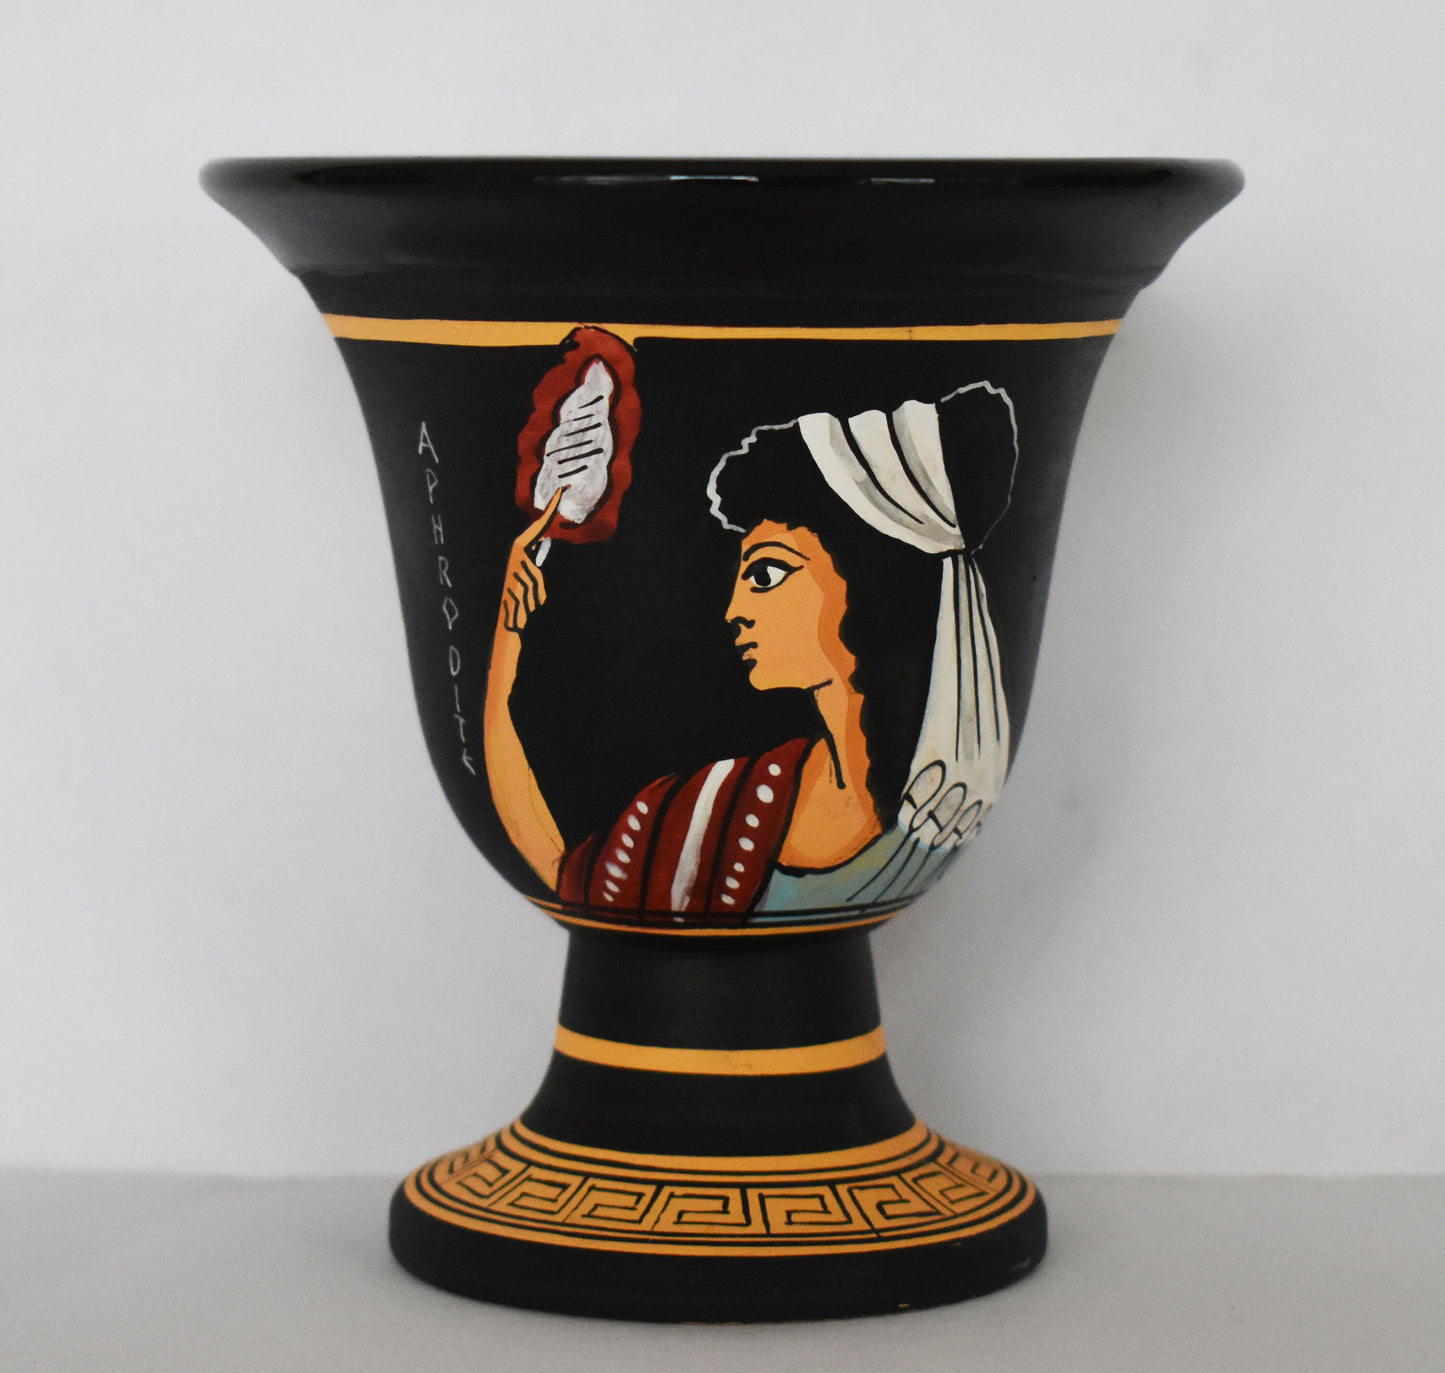 Pythagoras Cup - Fair Cup, Cup of Justice - Aphrodite Venus - Greek Roman Goddess of Love, Beauty, Fertility - Ceramic  - Handmade in Greece